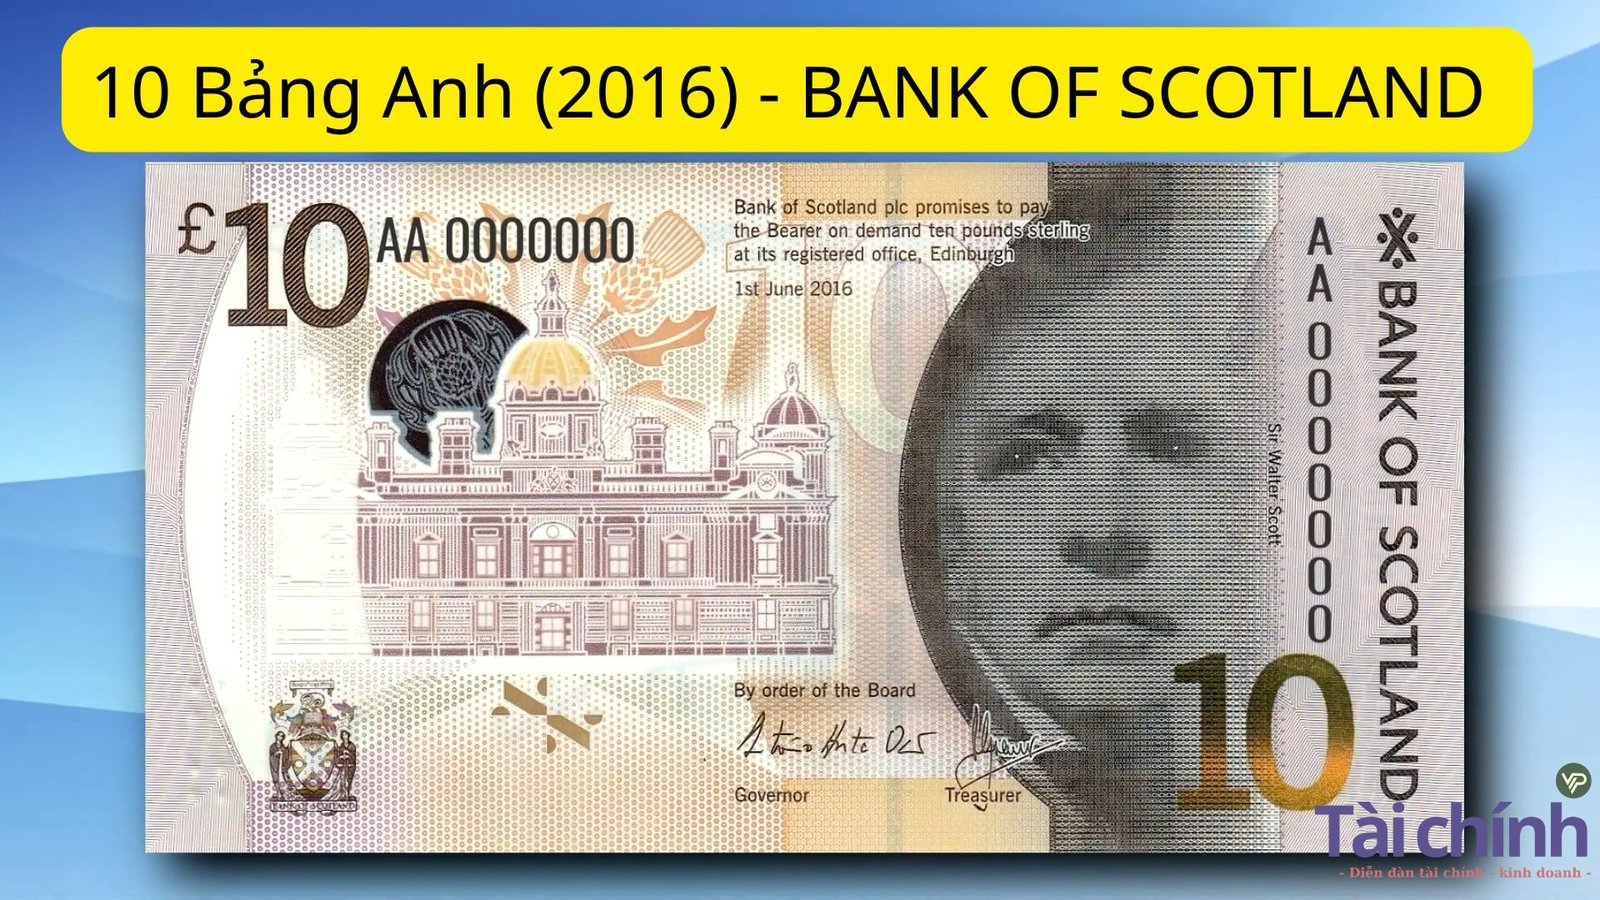 10 Bảng Anh (2016) - BANK OF SCOTLAND